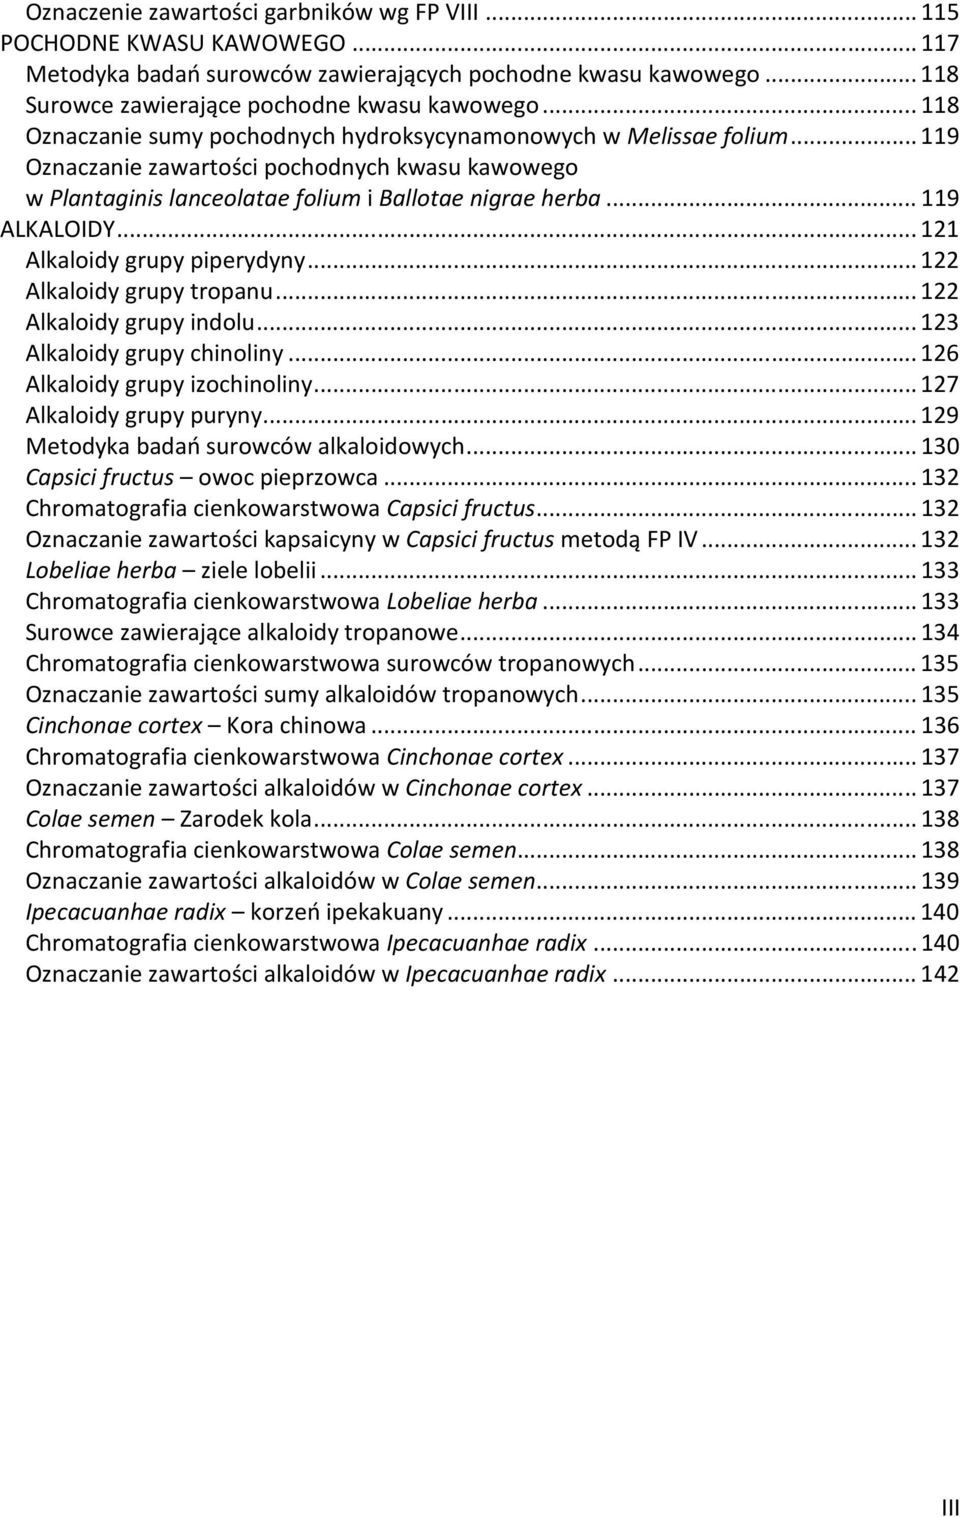 .. 121 Alkaloidy grupy piperydyny... 122 Alkaloidy grupy tropanu... 122 Alkaloidy grupy indolu... 123 Alkaloidy grupy chinoliny... 126 Alkaloidy grupy izochinoliny... 127 Alkaloidy grupy puryny.